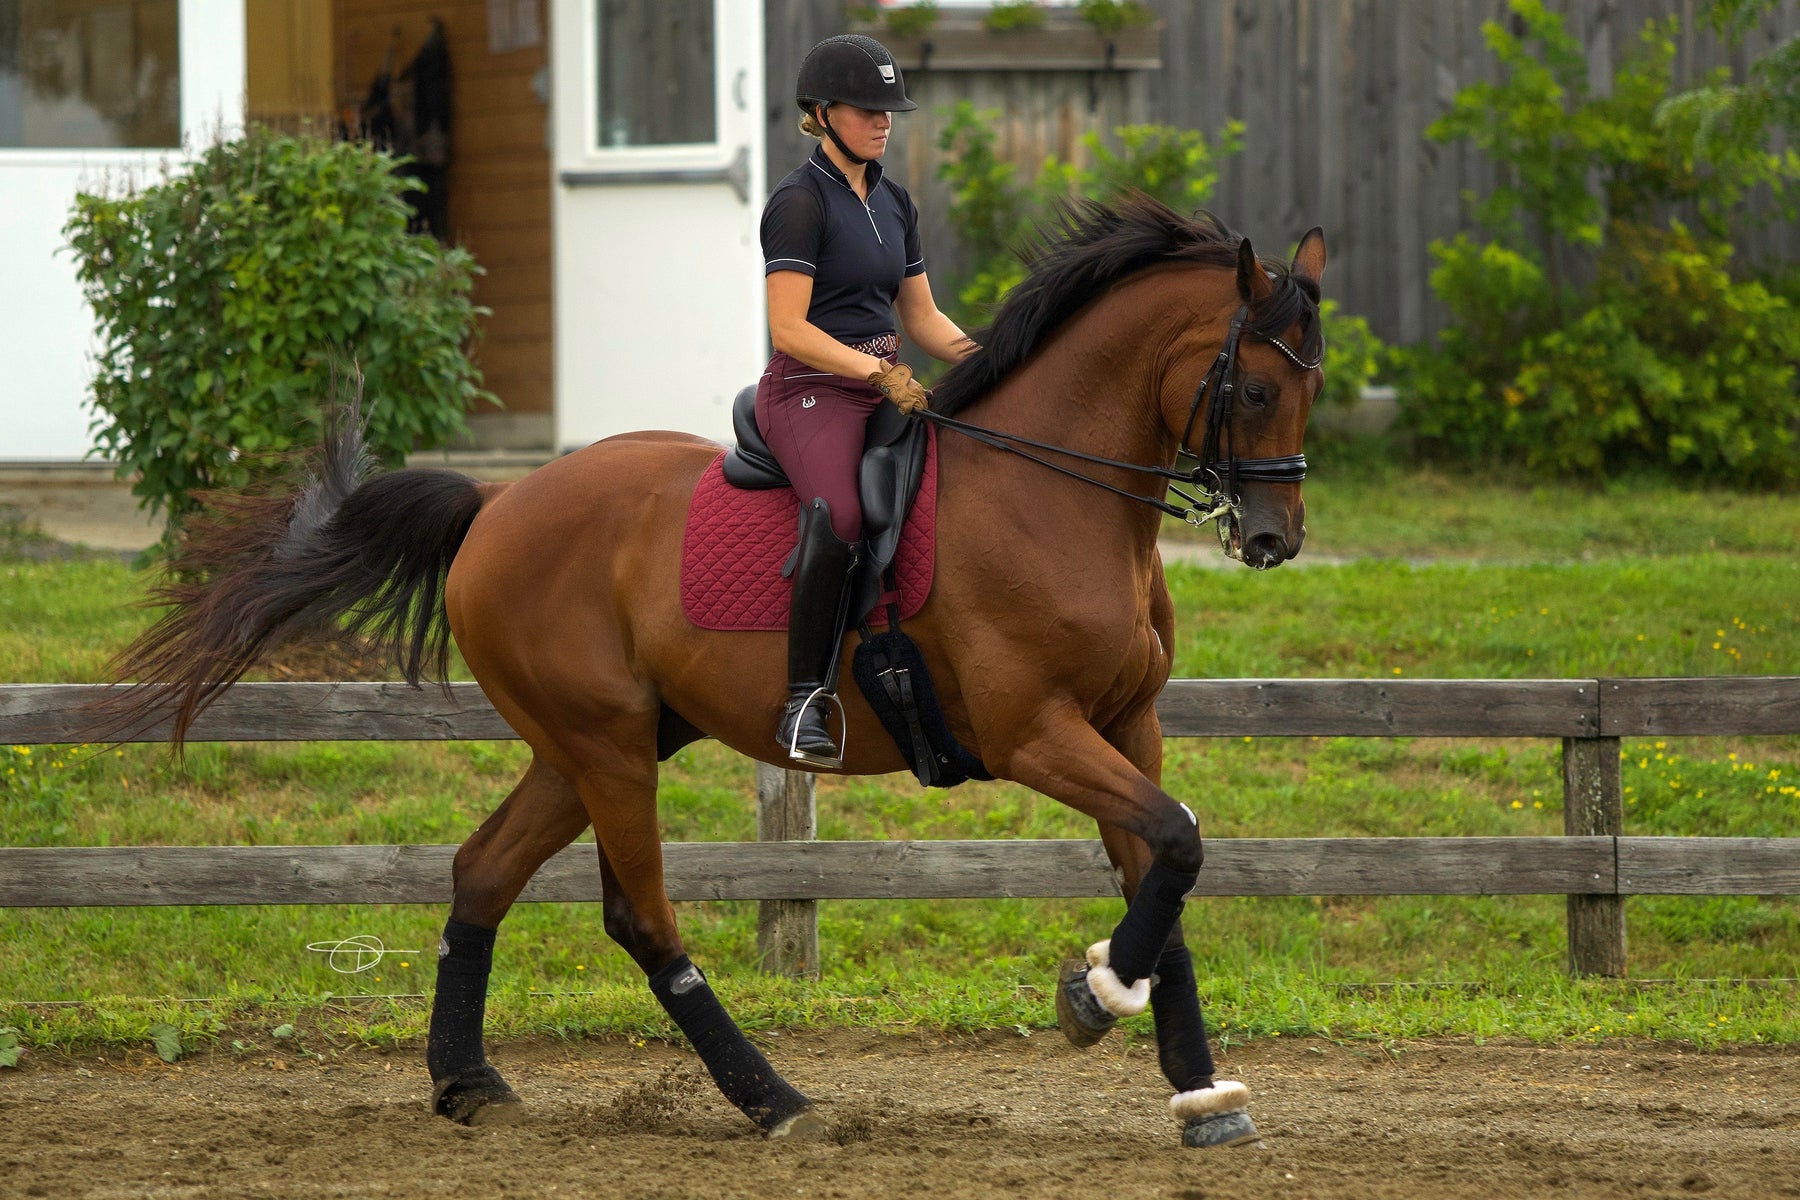 Leveza - Equestrian Apparel & Horse Riding Clothes